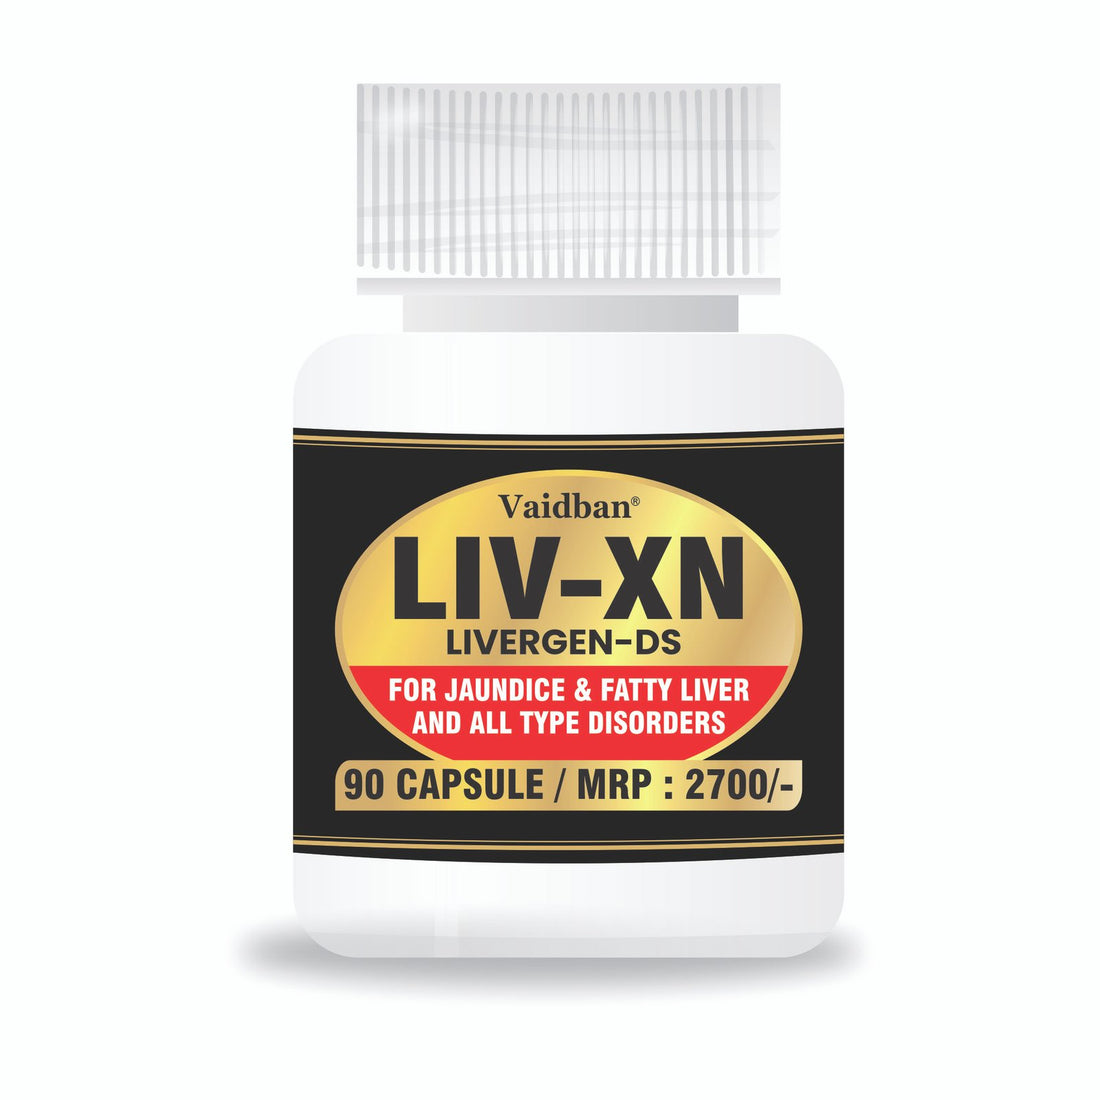 LIV XN Livergen- ds